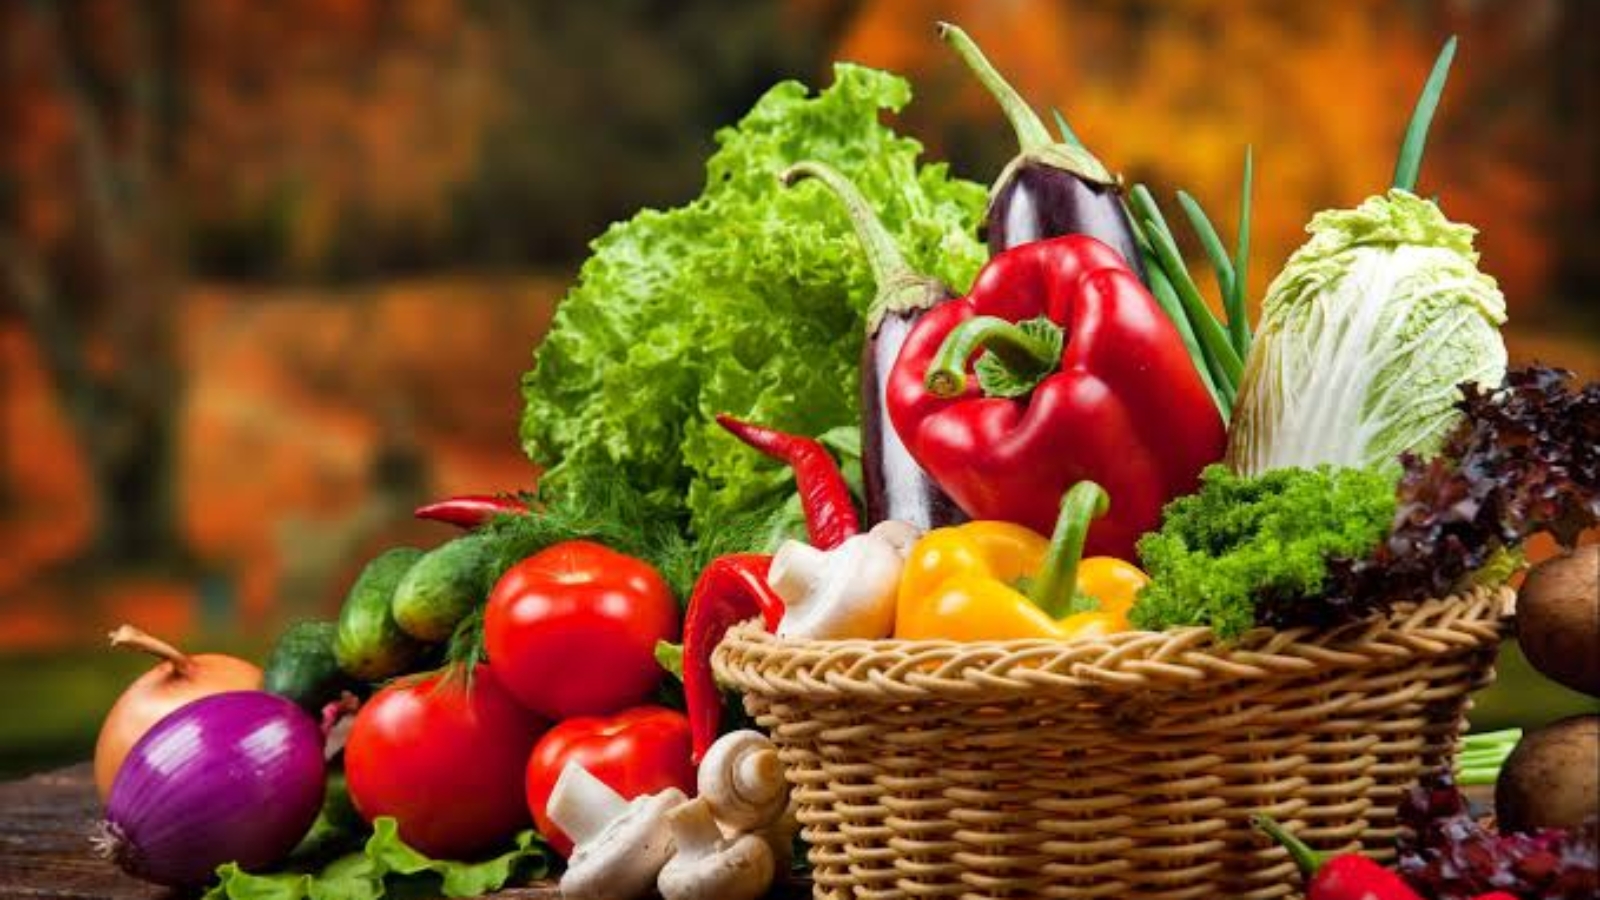 Macam- macam sayur dan buah yang mengandung vitamin e